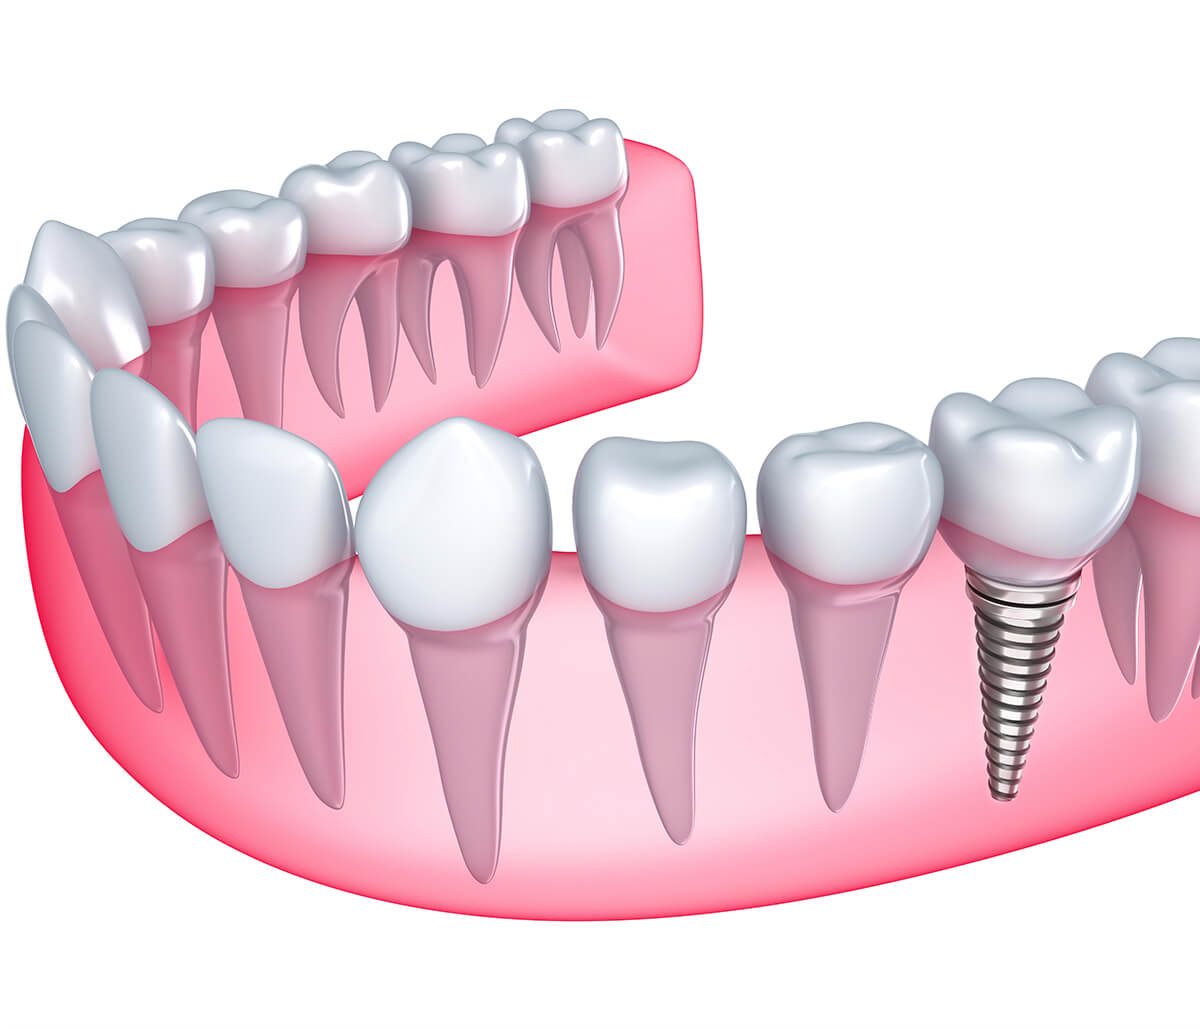 Dentist Describes Replacing Missing Teeth with Dental Implants in Kirkland, WA Area